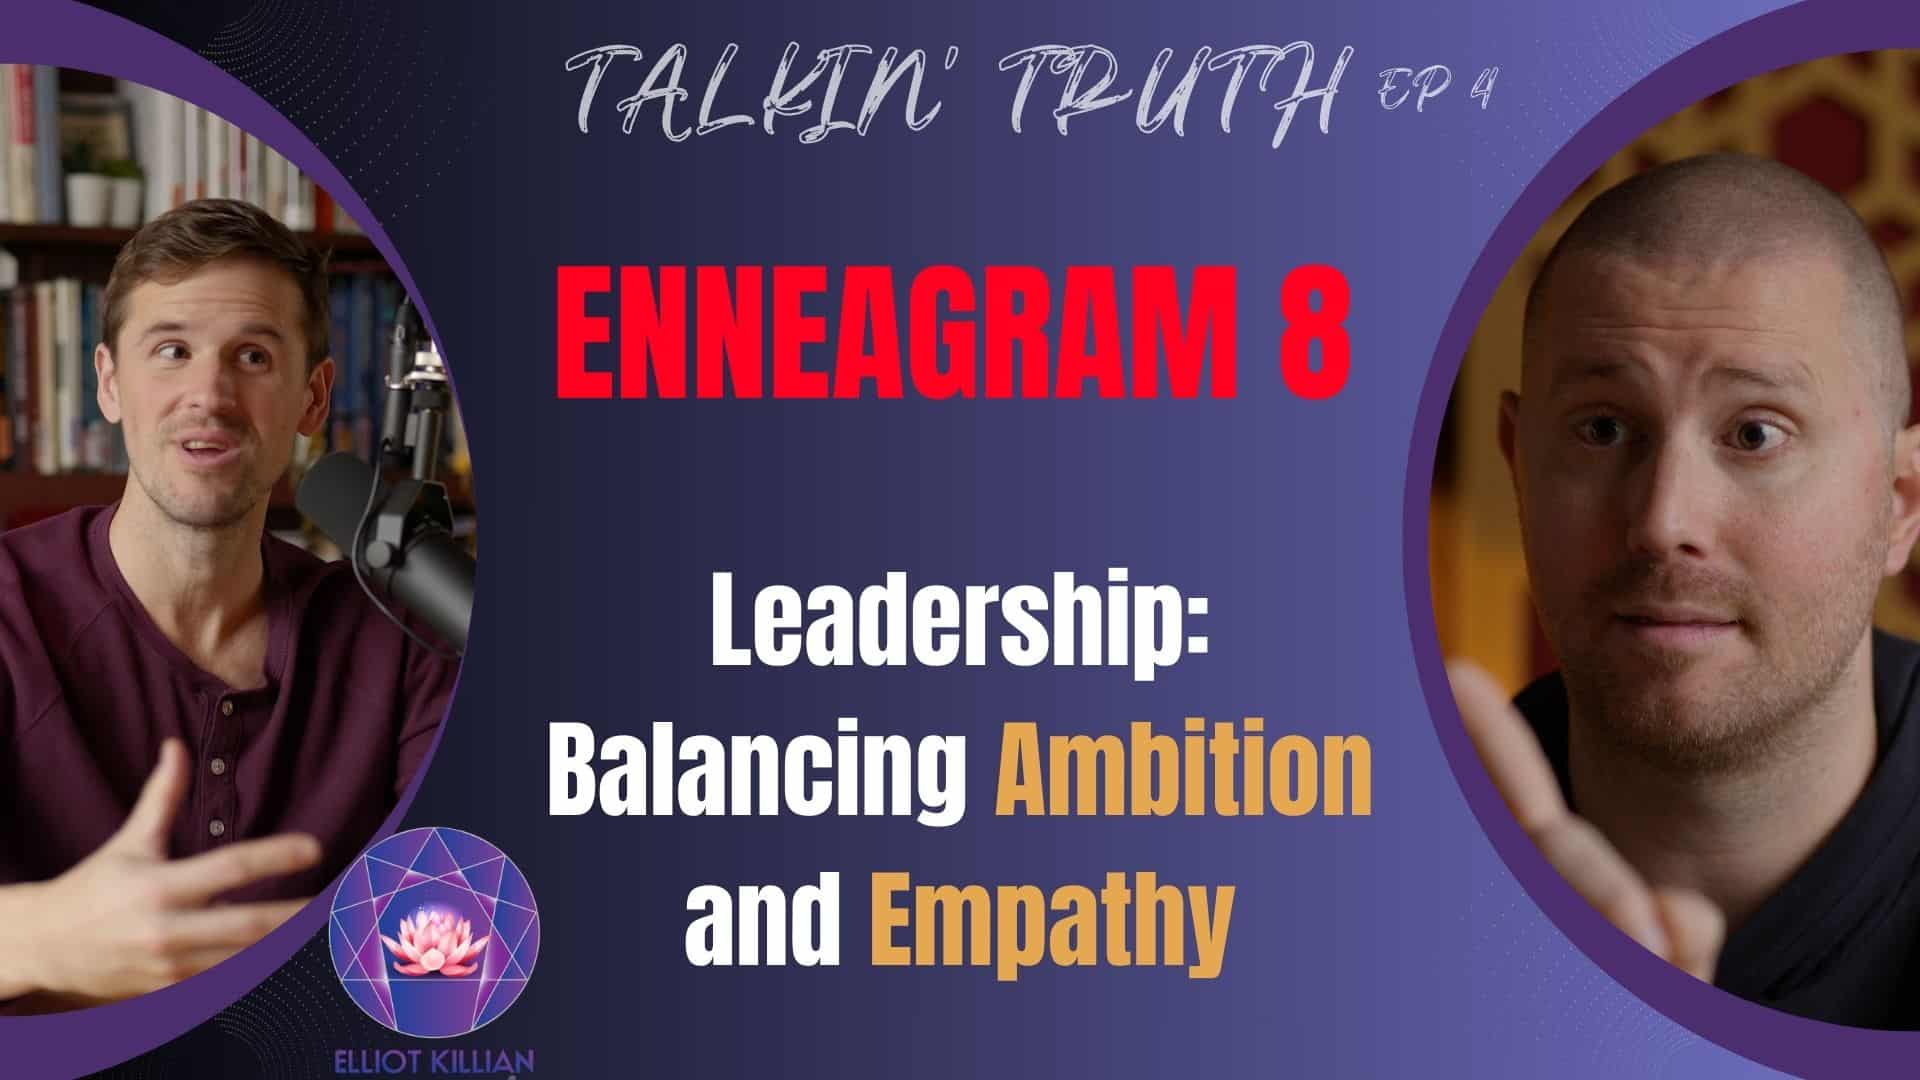 Talking Truth Elliot Killian Enneagram 8 Ambition, Leadership, Empathy